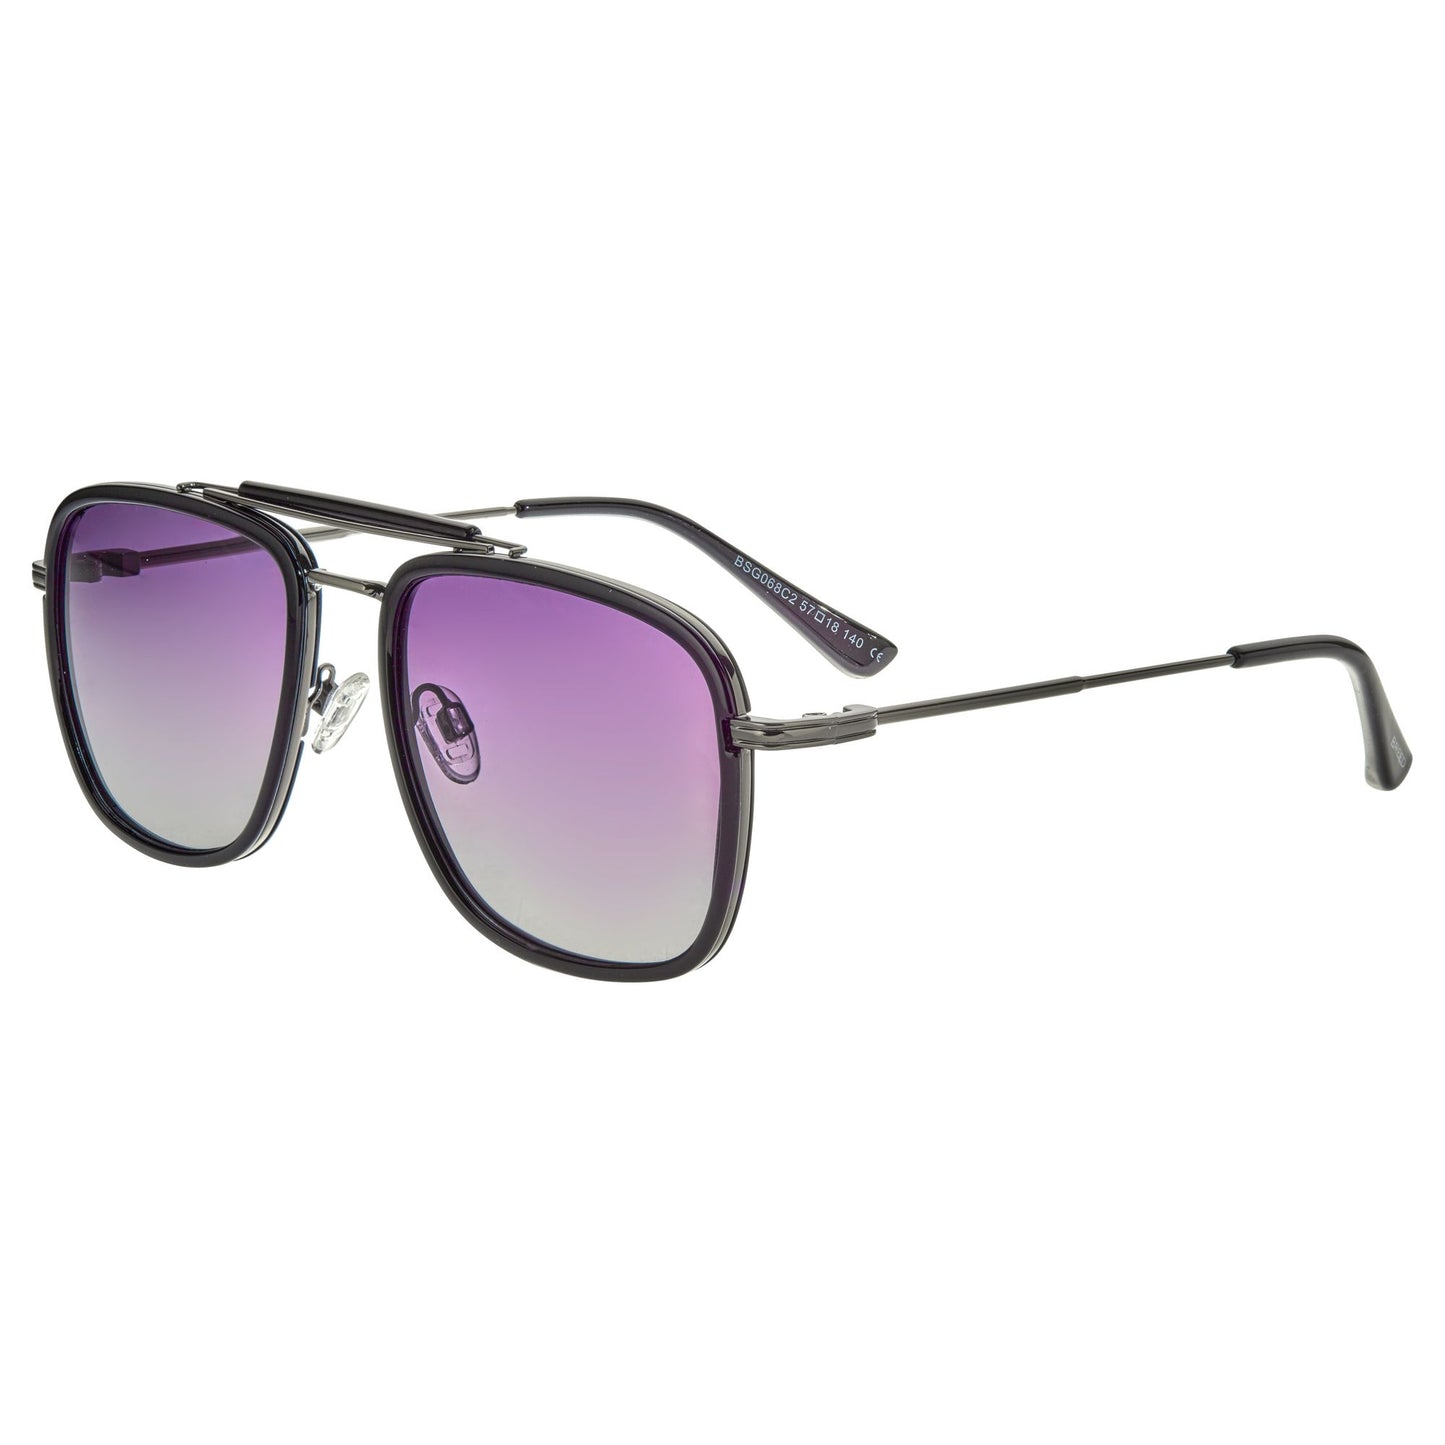 Breed Flyer Polarized Sunglasses - Black/Black - BSG068C2